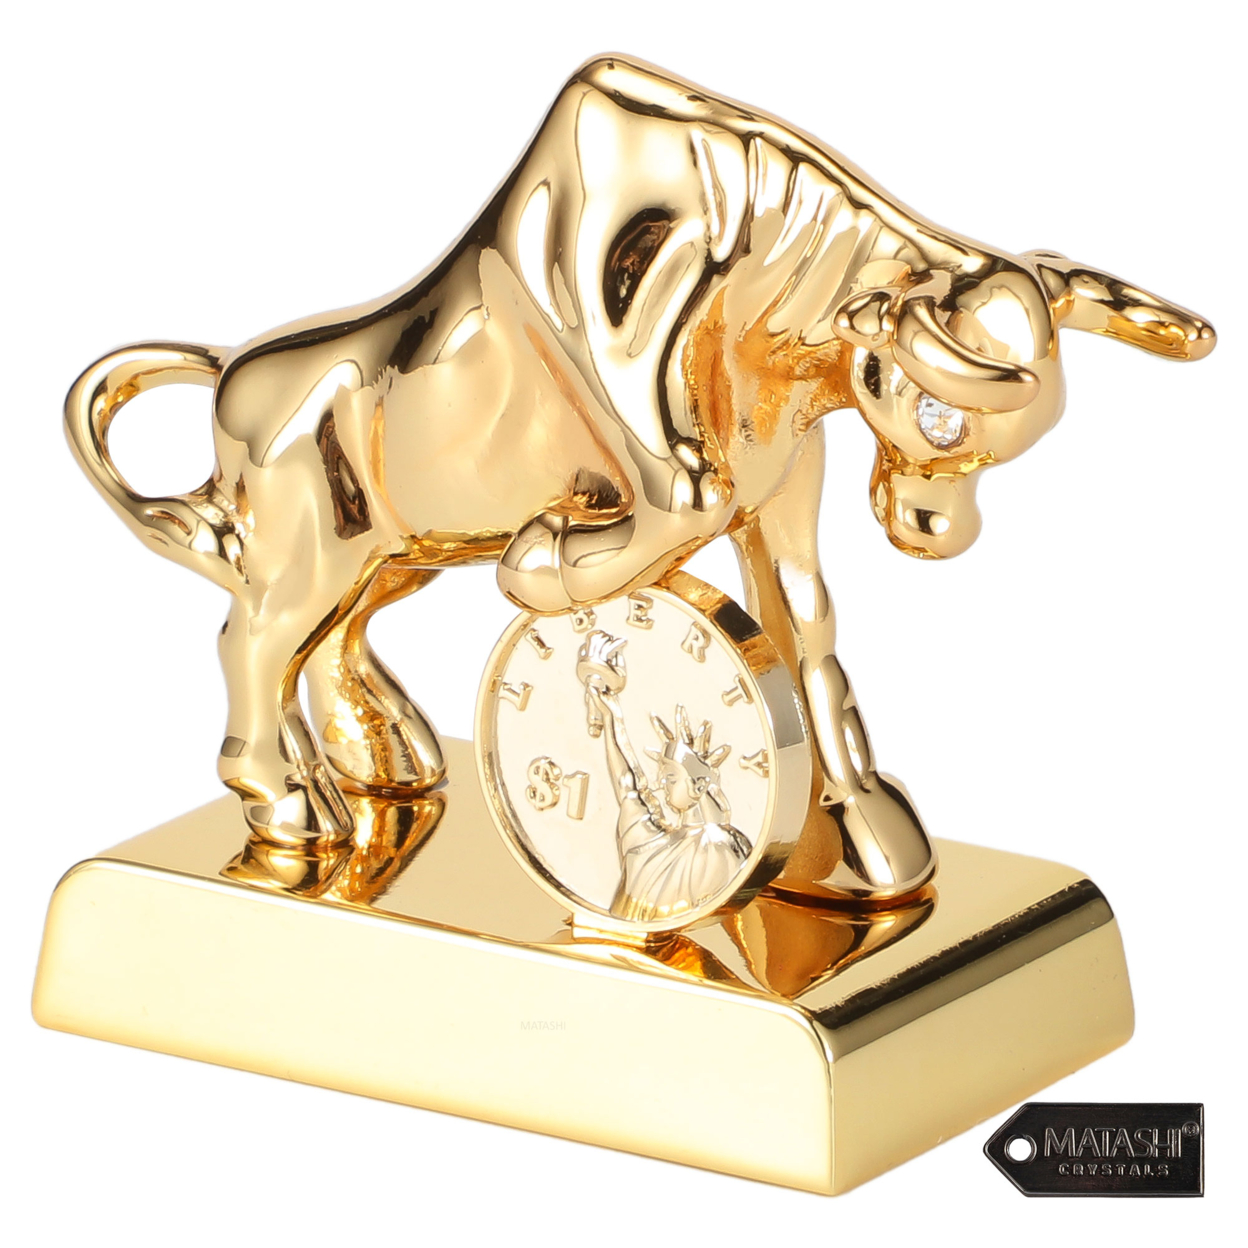 Matashi 24K Gold Plated Crystal Studded Ox/Bull Figurine With Coin Ornament